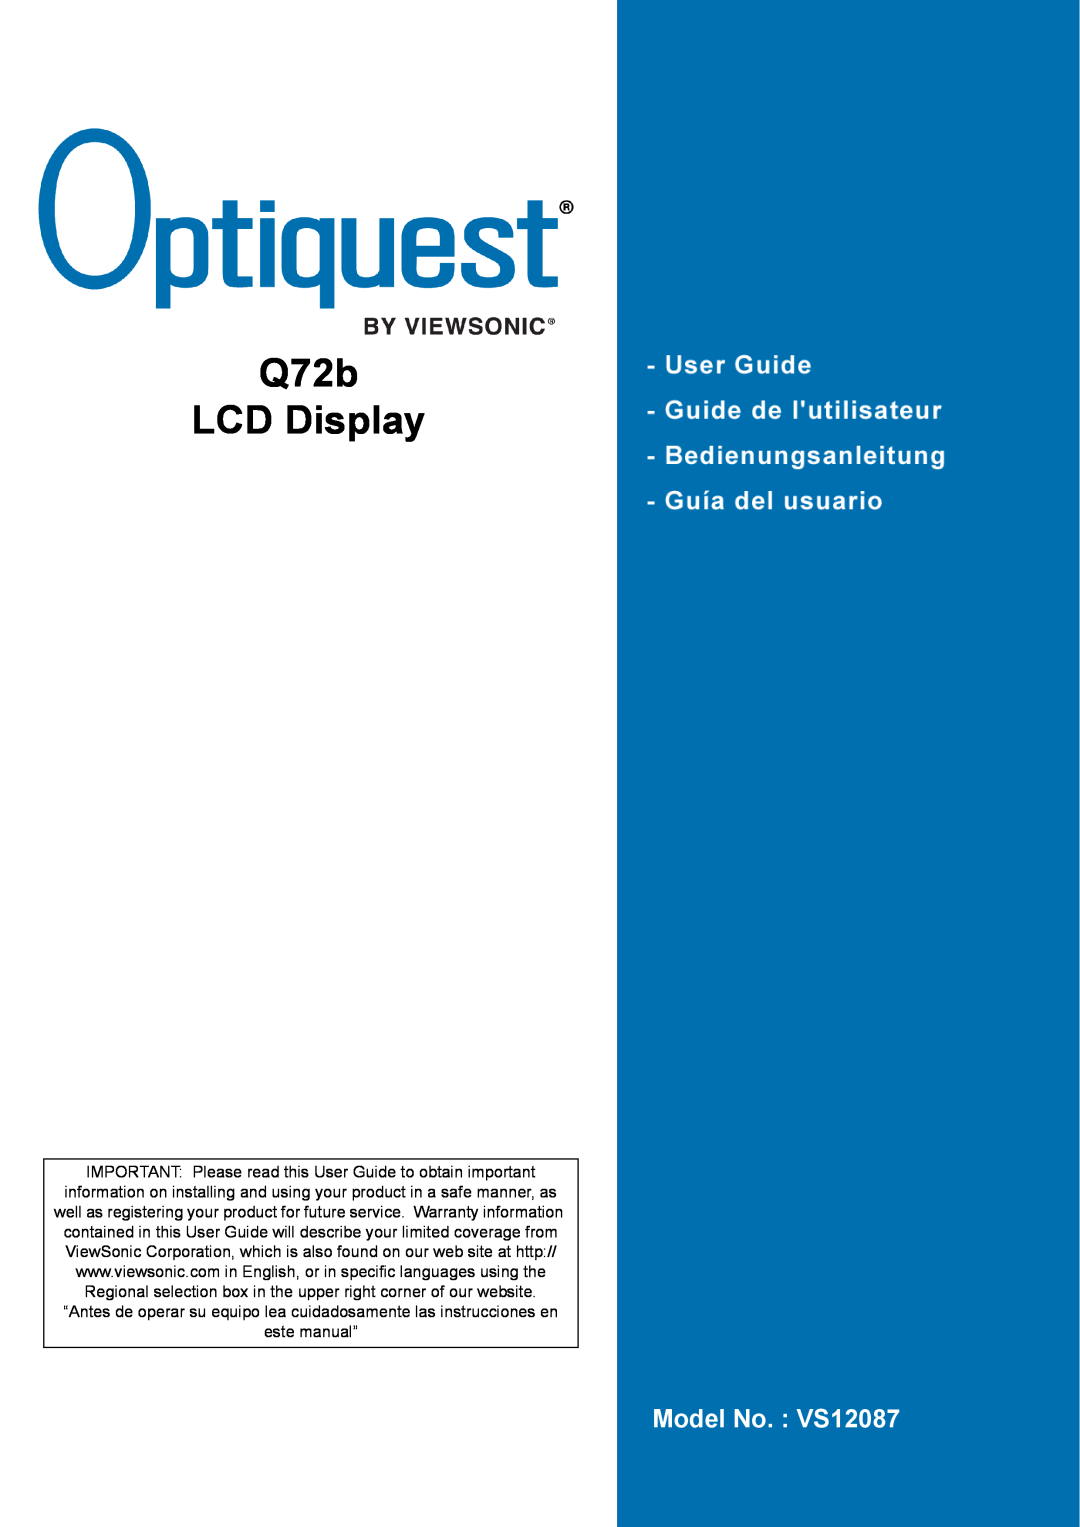 ViewSonic warranty Q72b LCD Display, Model No. : VS12087 